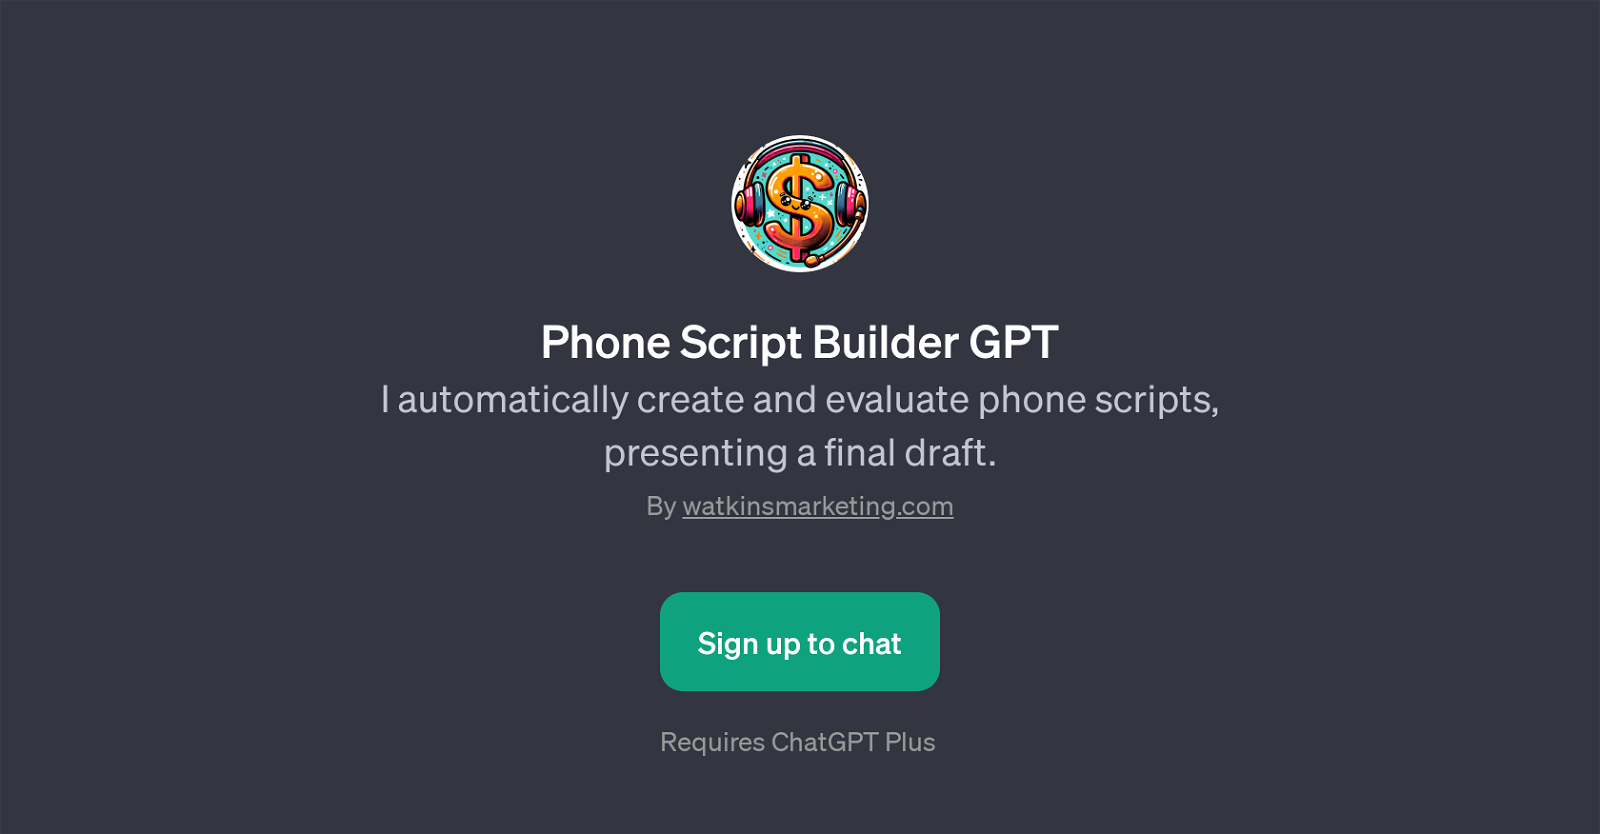 Phone Script Builder GPT website